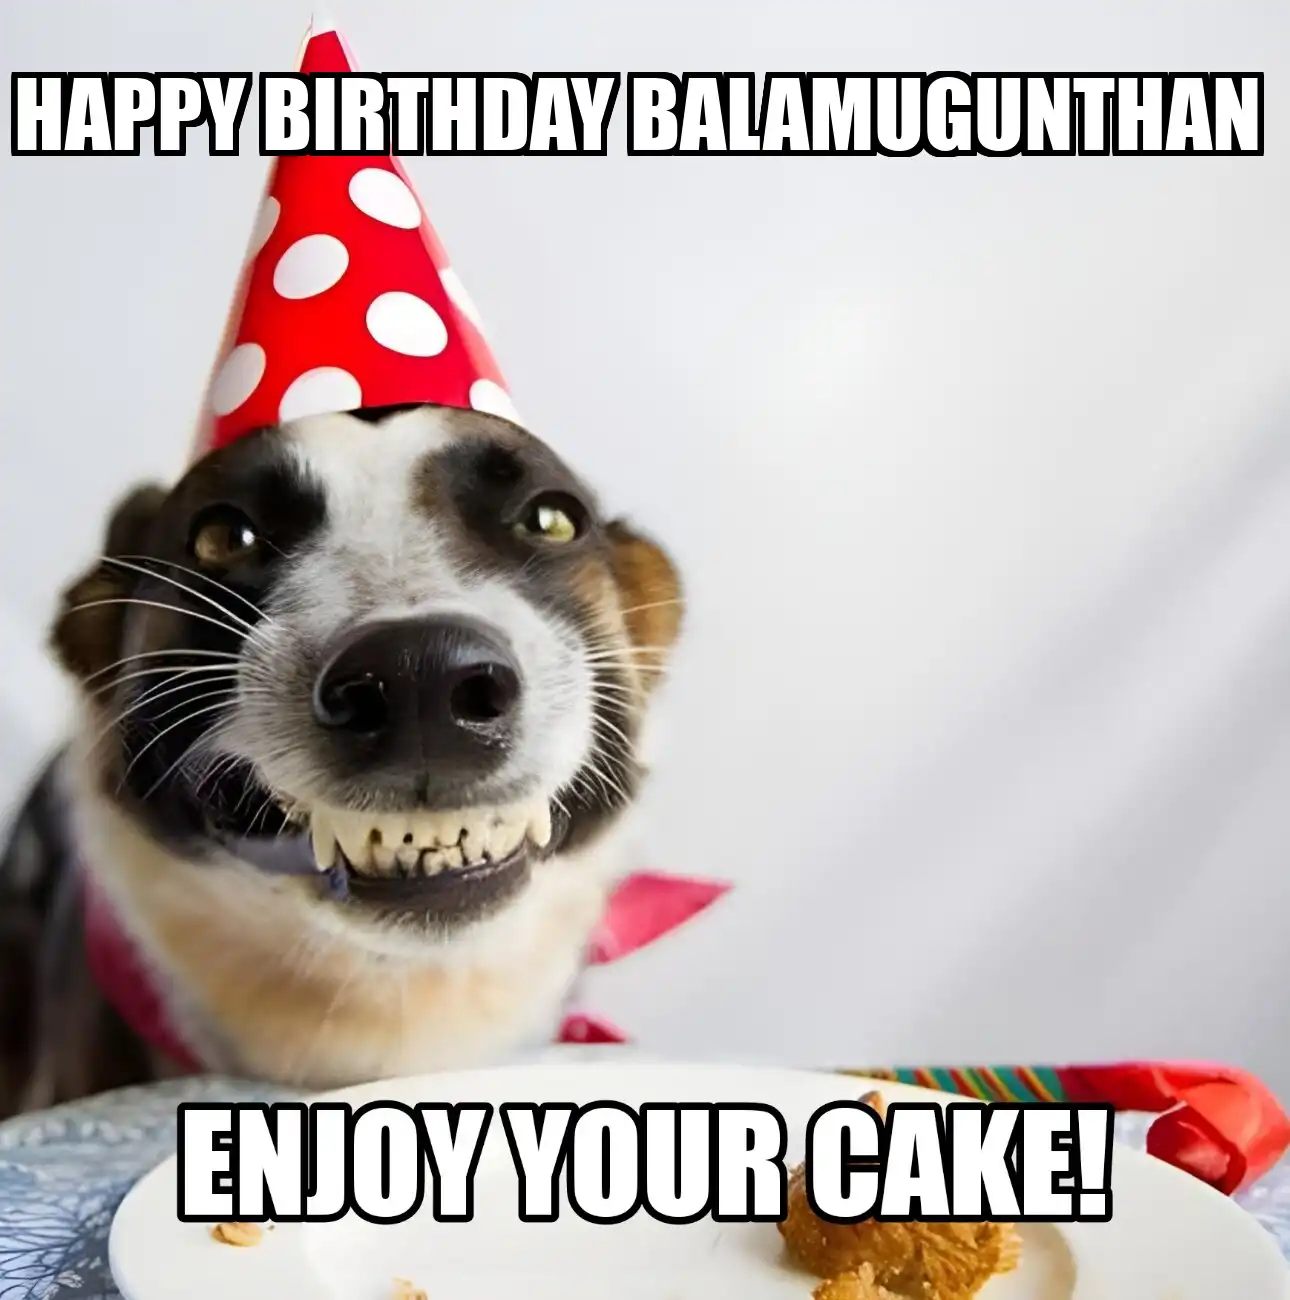 Happy Birthday Balamugunthan Enjoy Your Cake Dog Meme